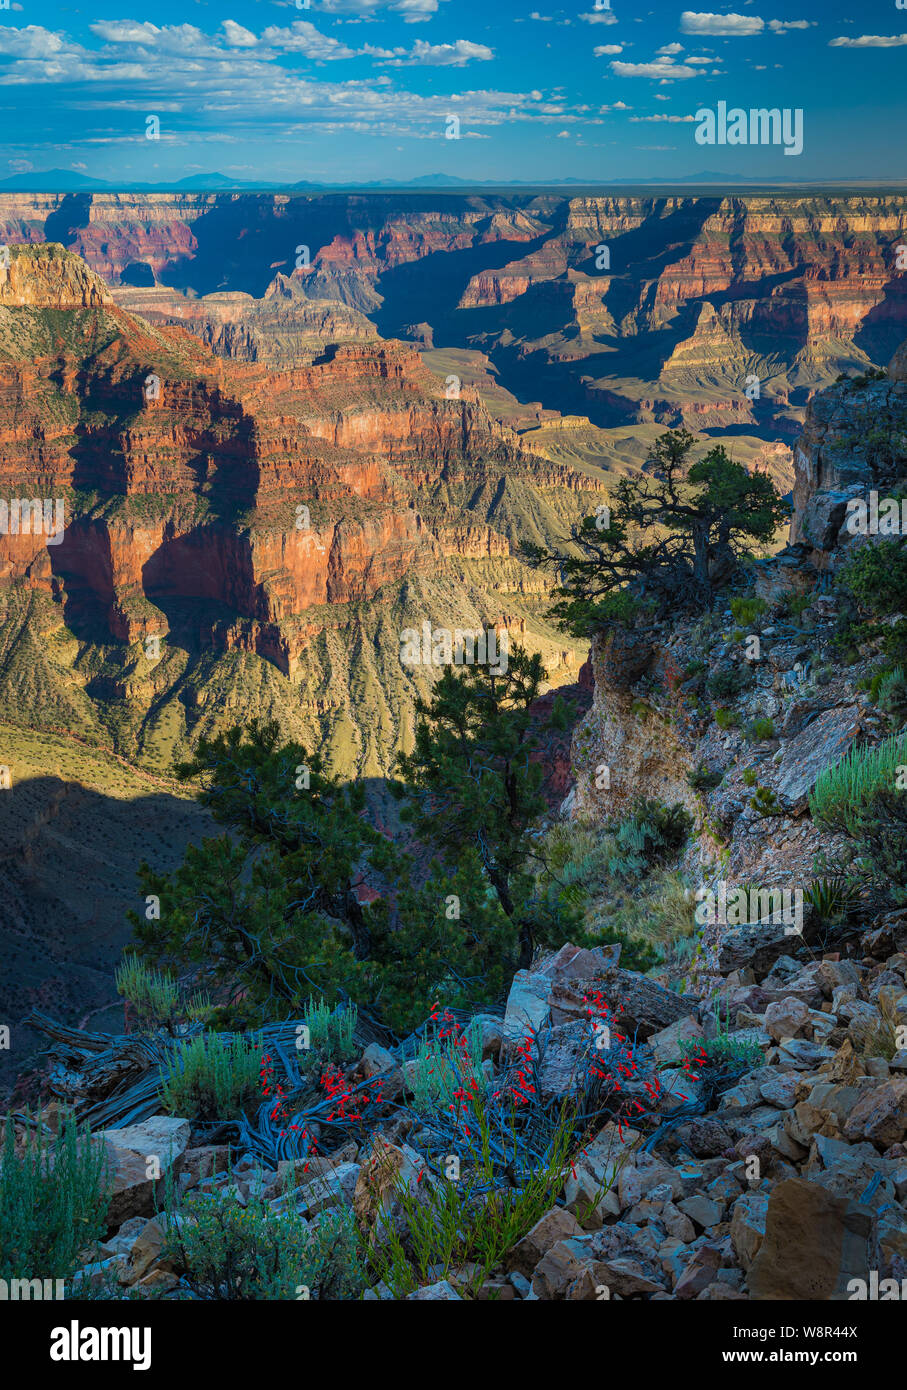 Point Sublime auf der North Rim des Grand Canyon Nationalpark in Arizona, Usa Stockfoto